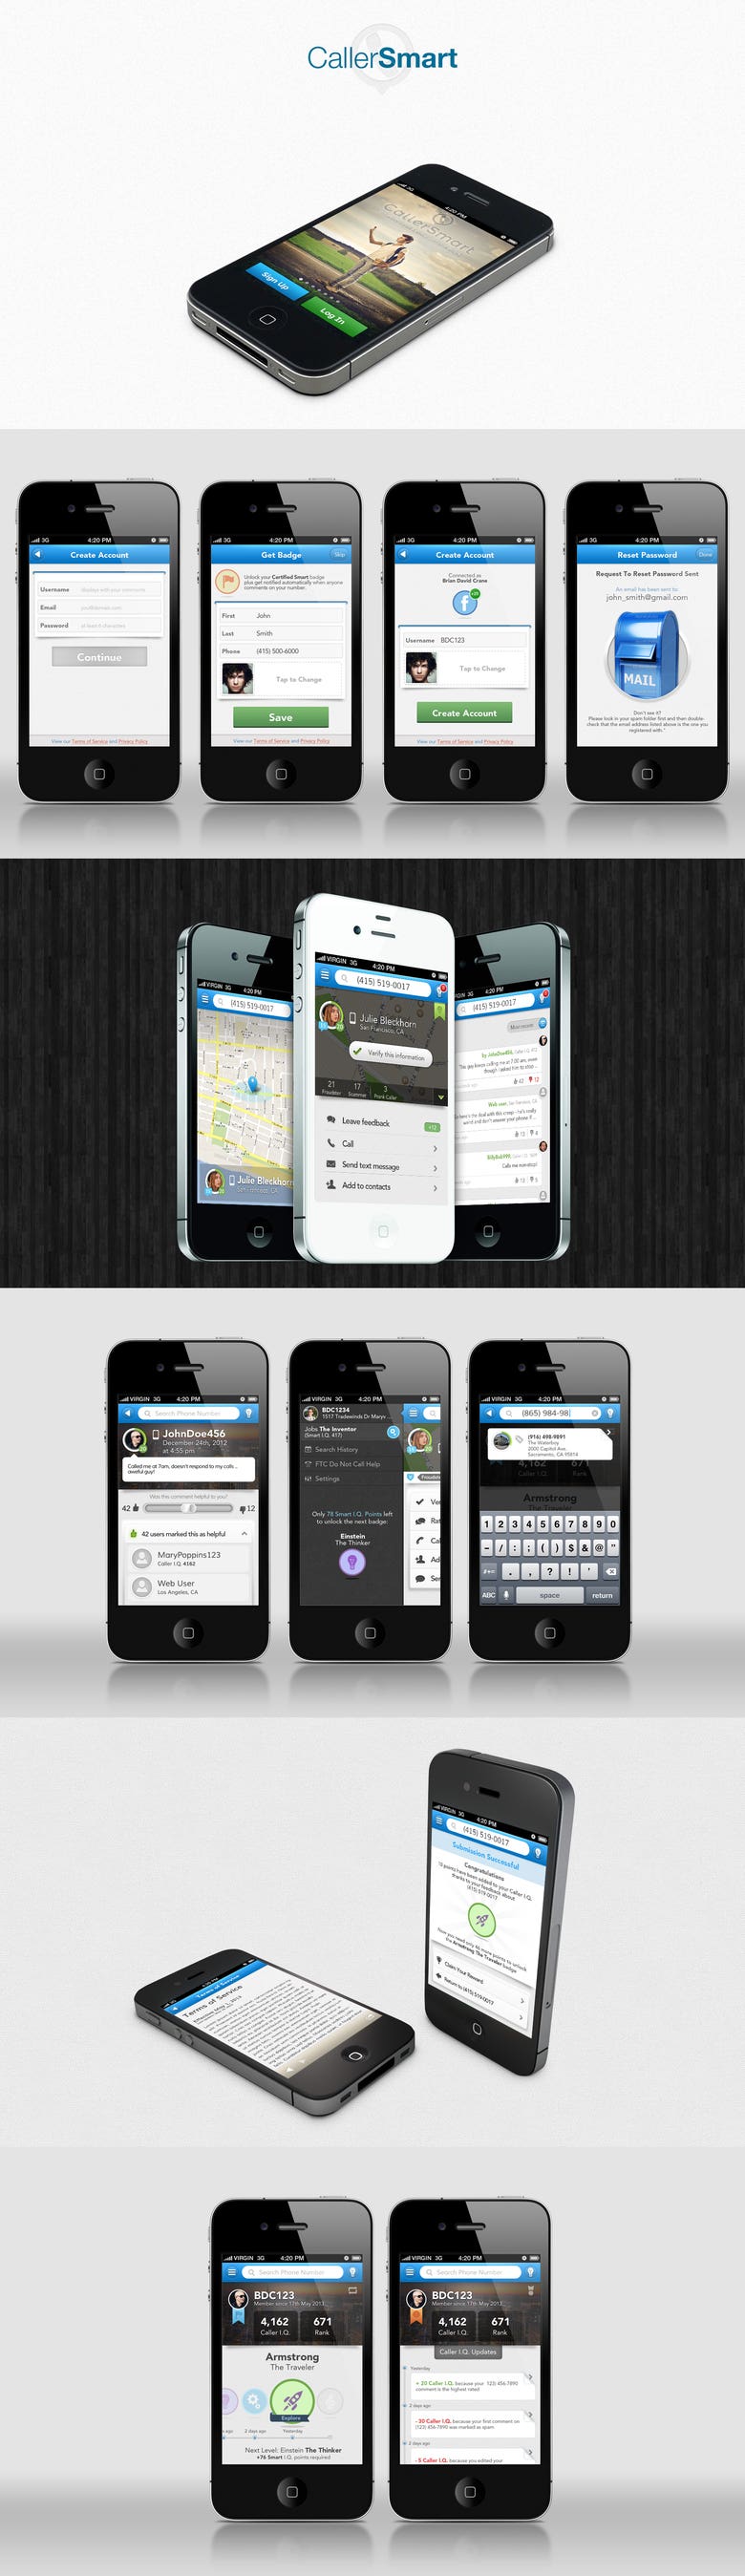 Mobile app design